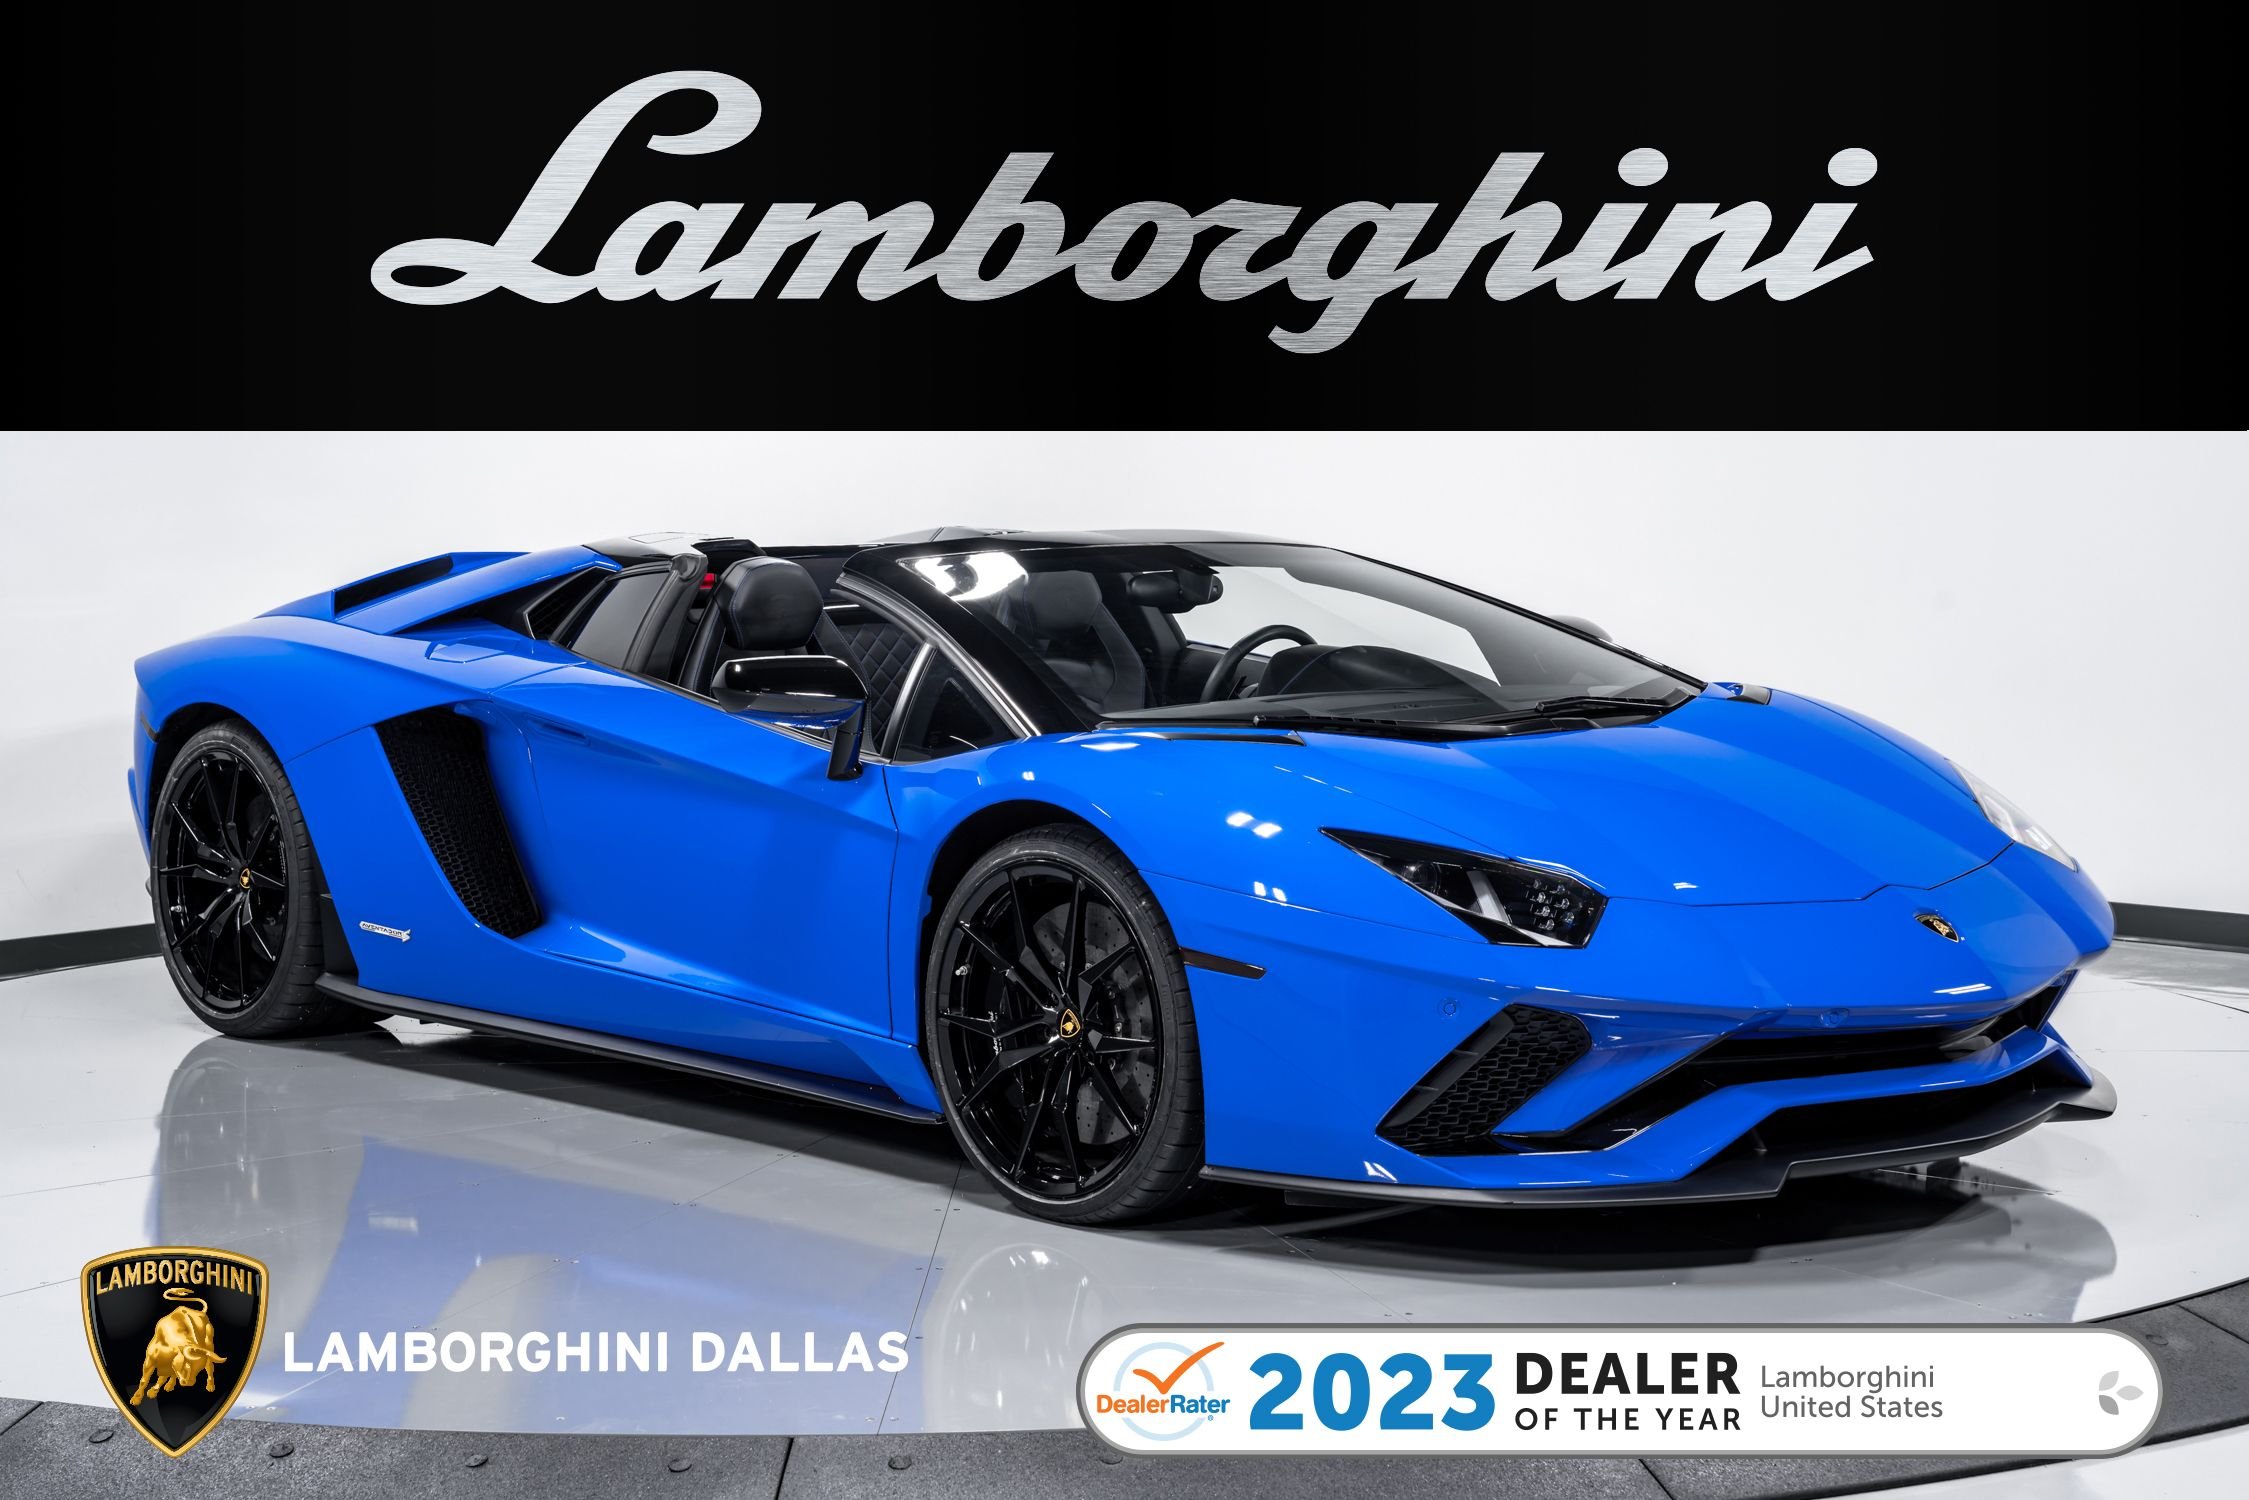 Lamborghini Dallas - Lamborghini, Service Center, Used Car Dealer -  Dealership Ratings